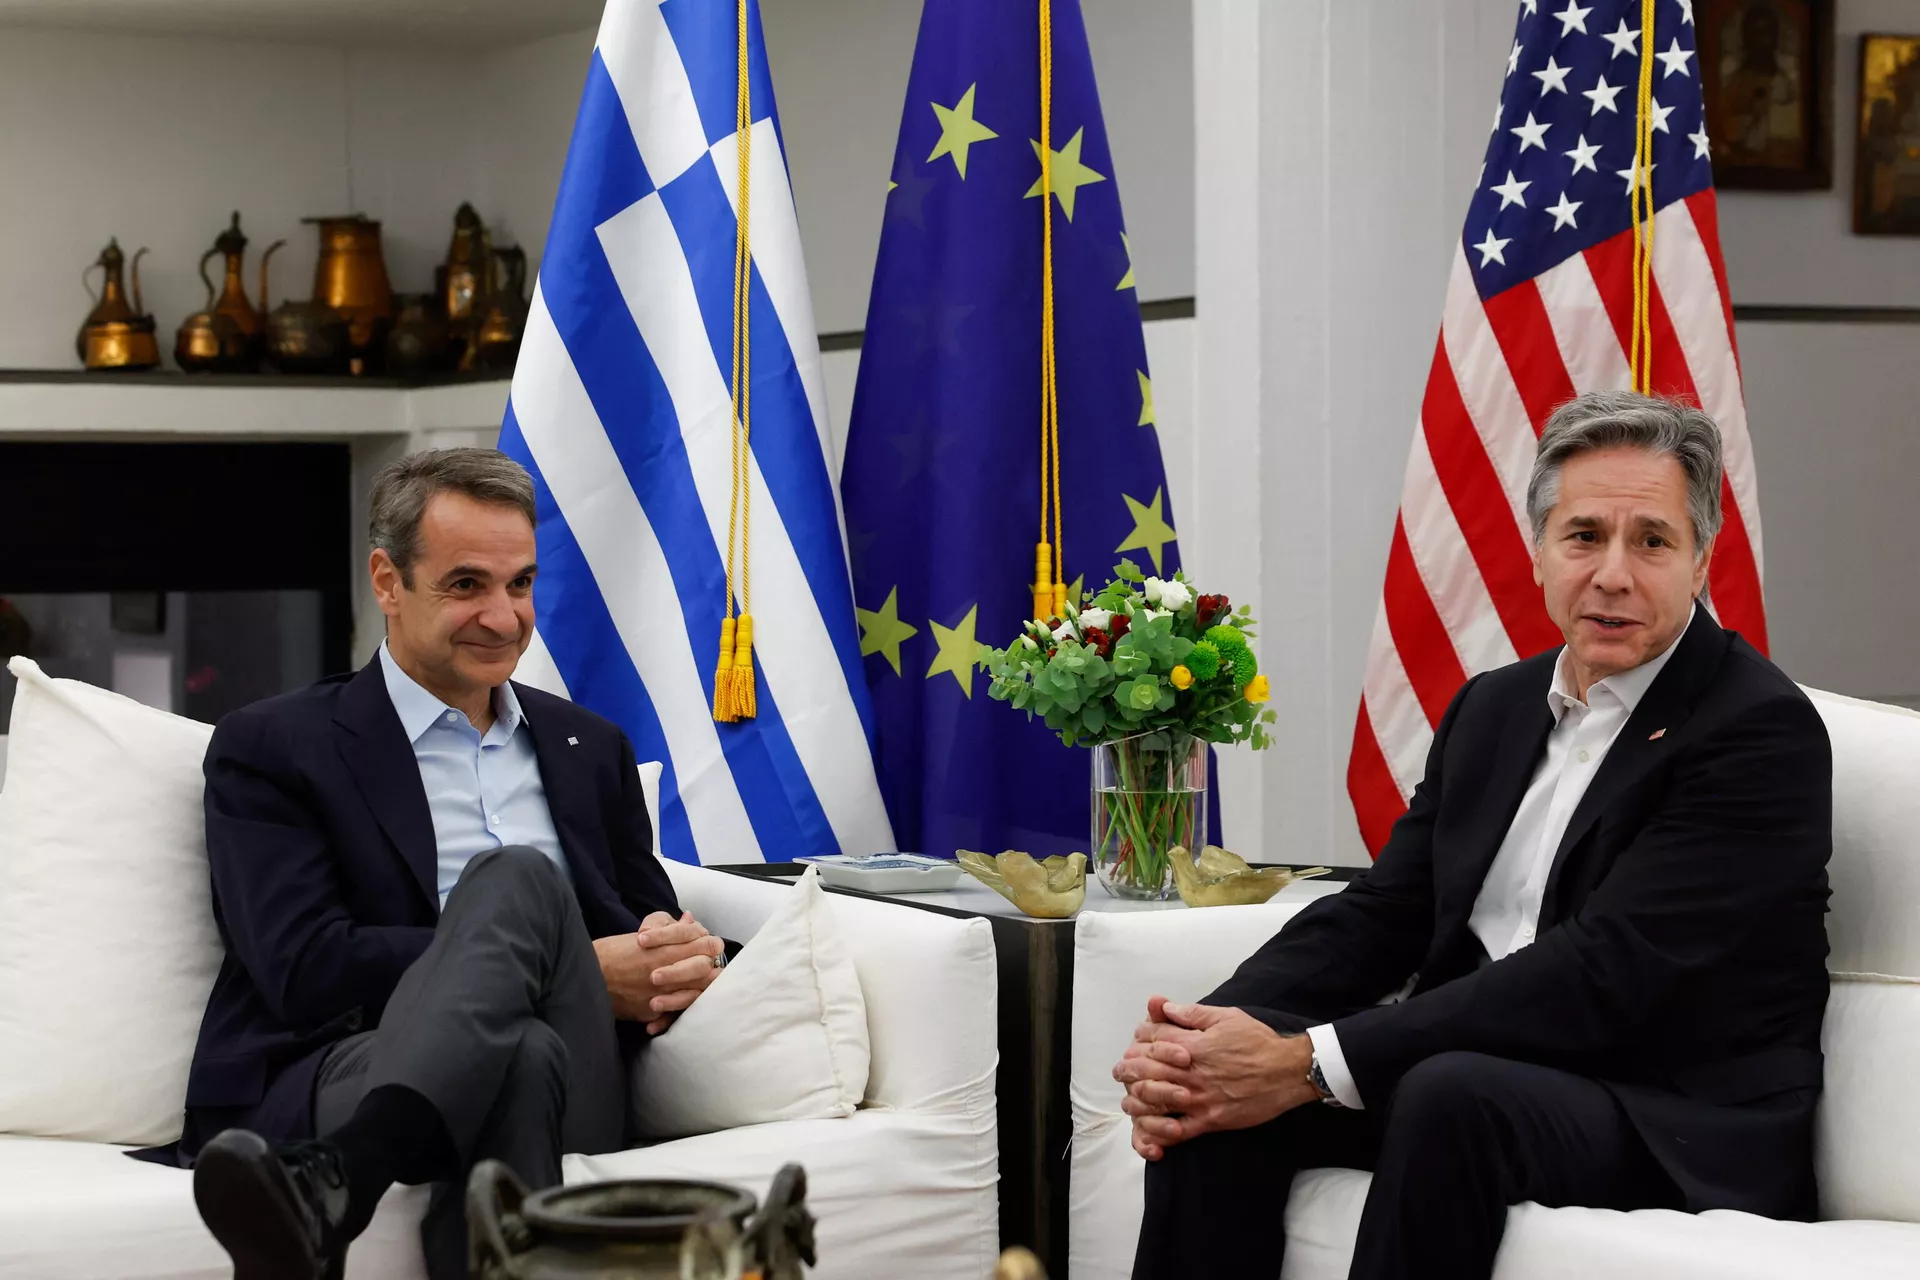 State Dept Shakedown: US Slaps ‘Ultimatum’ on Greece in Bid to ‘Extort’ More Ukraine Aid